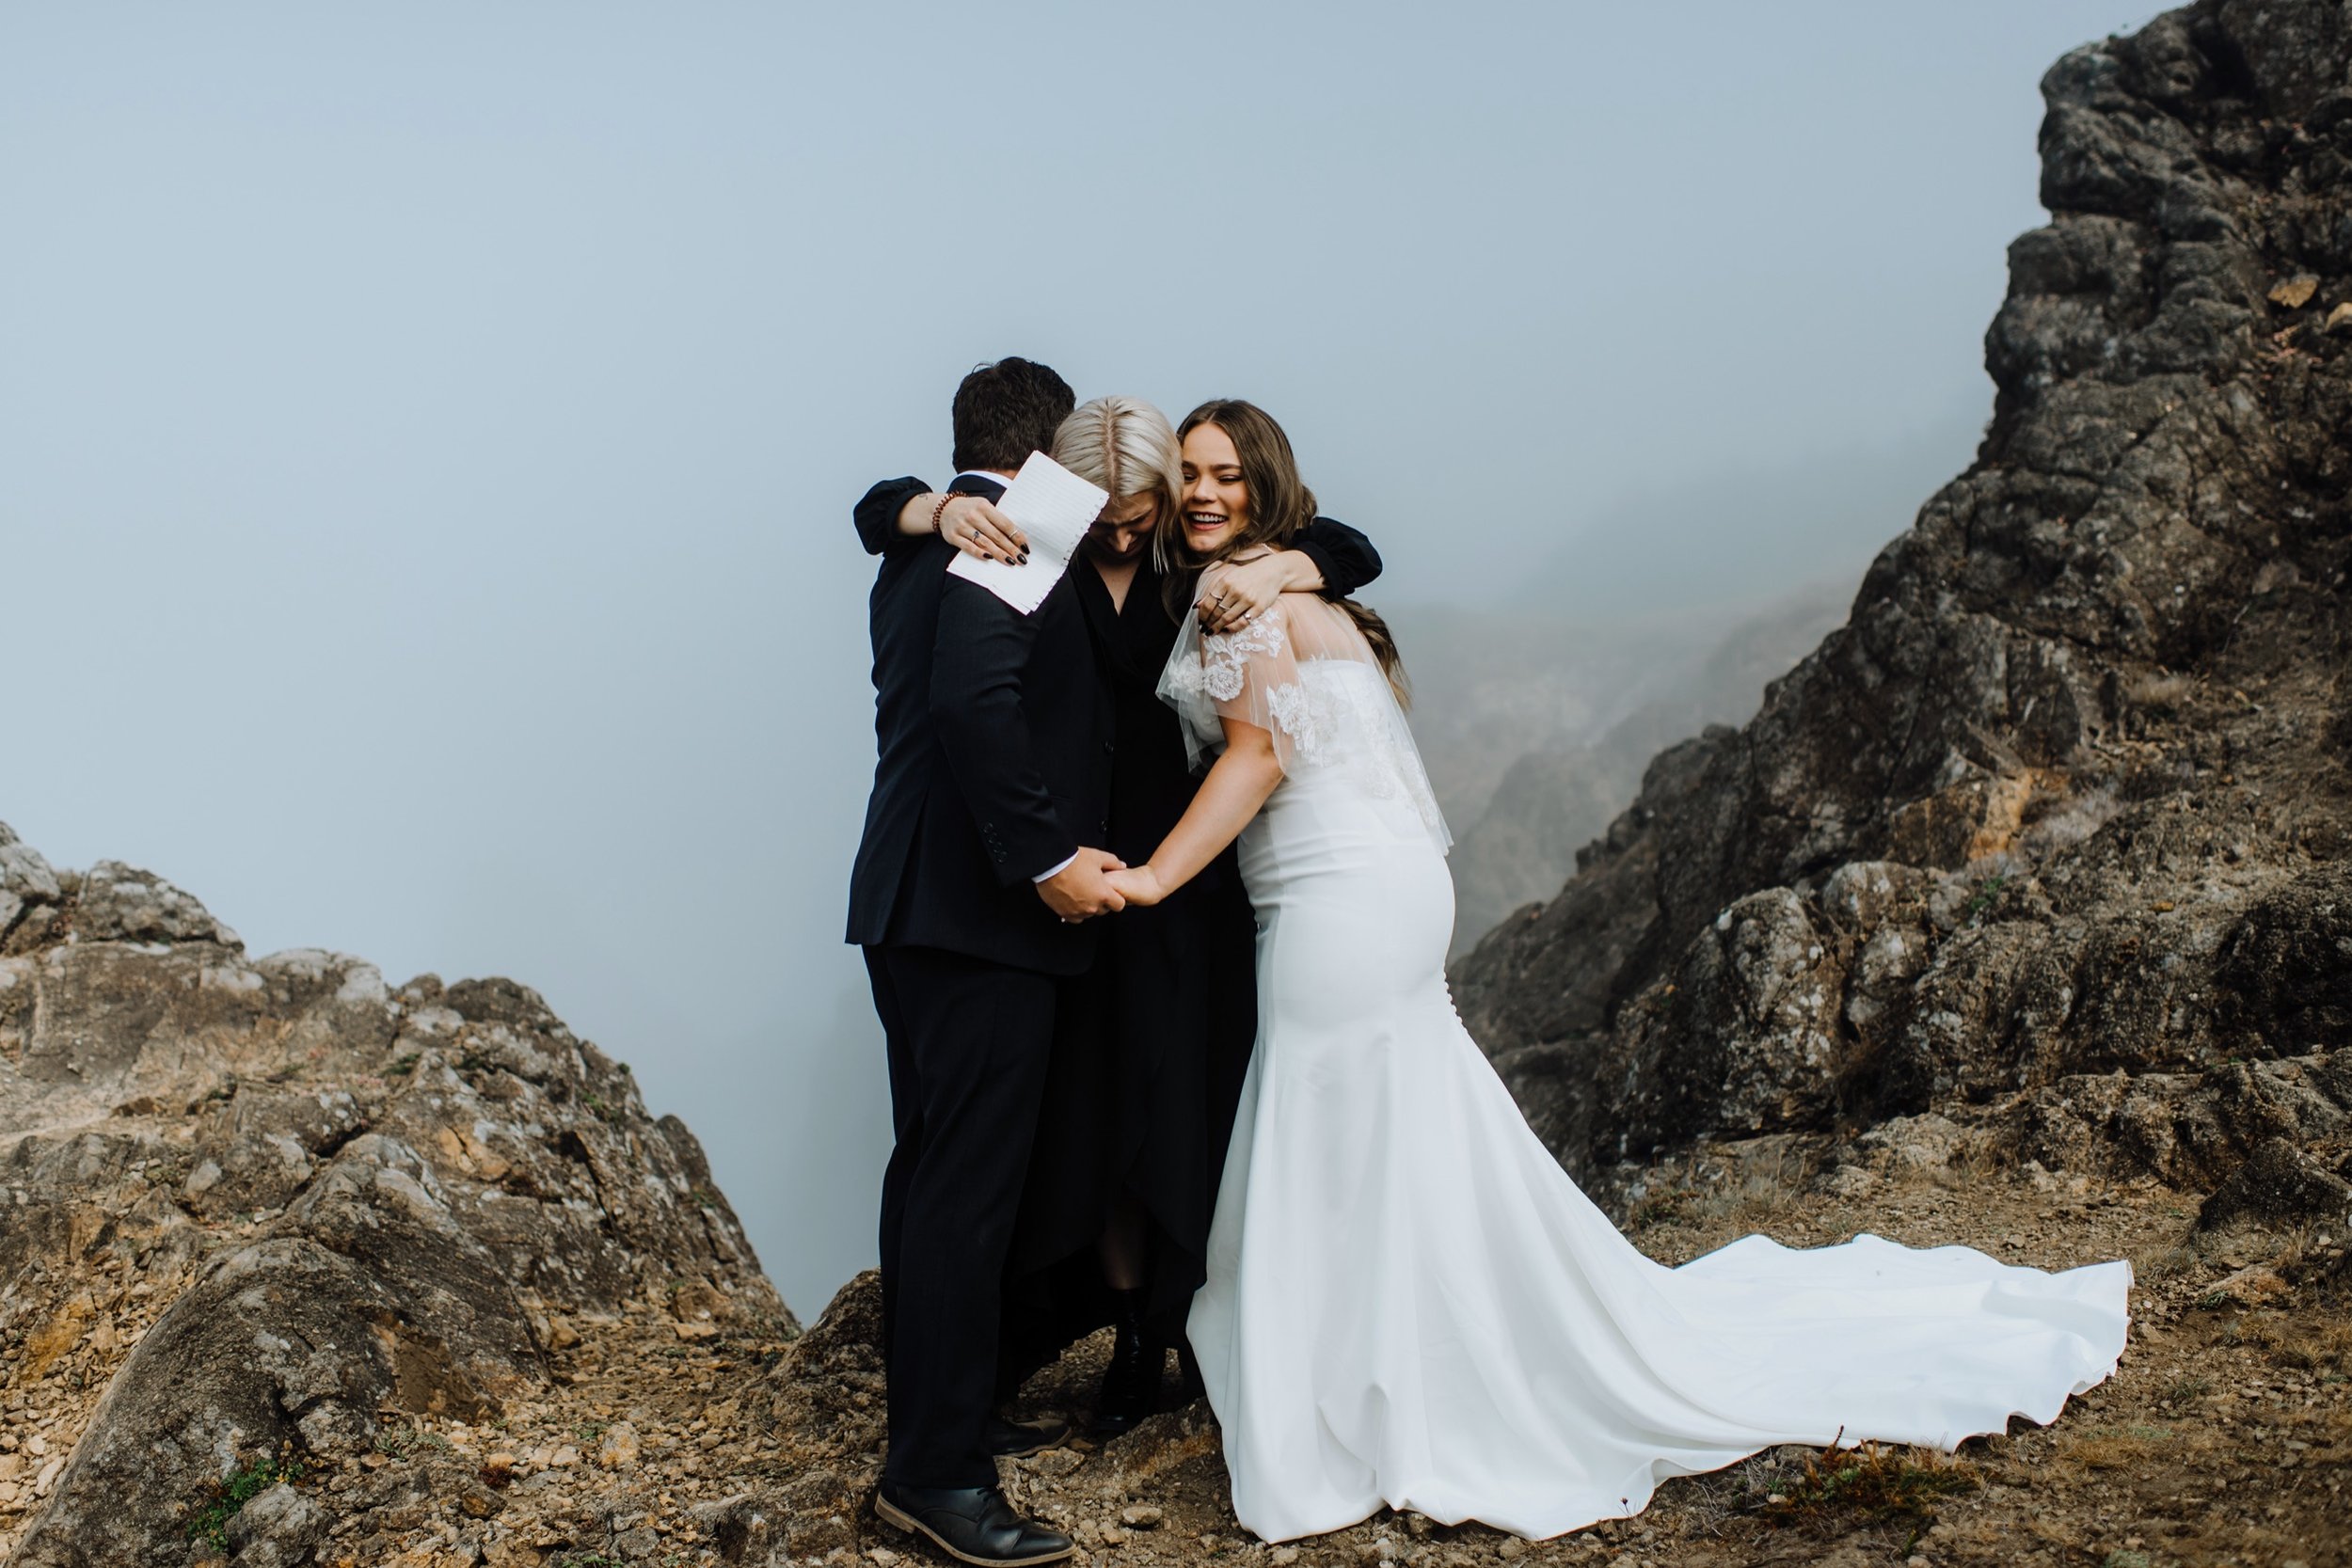 Moody-elopement-on-the-foggy-Oregon-Coast-Cliffside-22.jpg